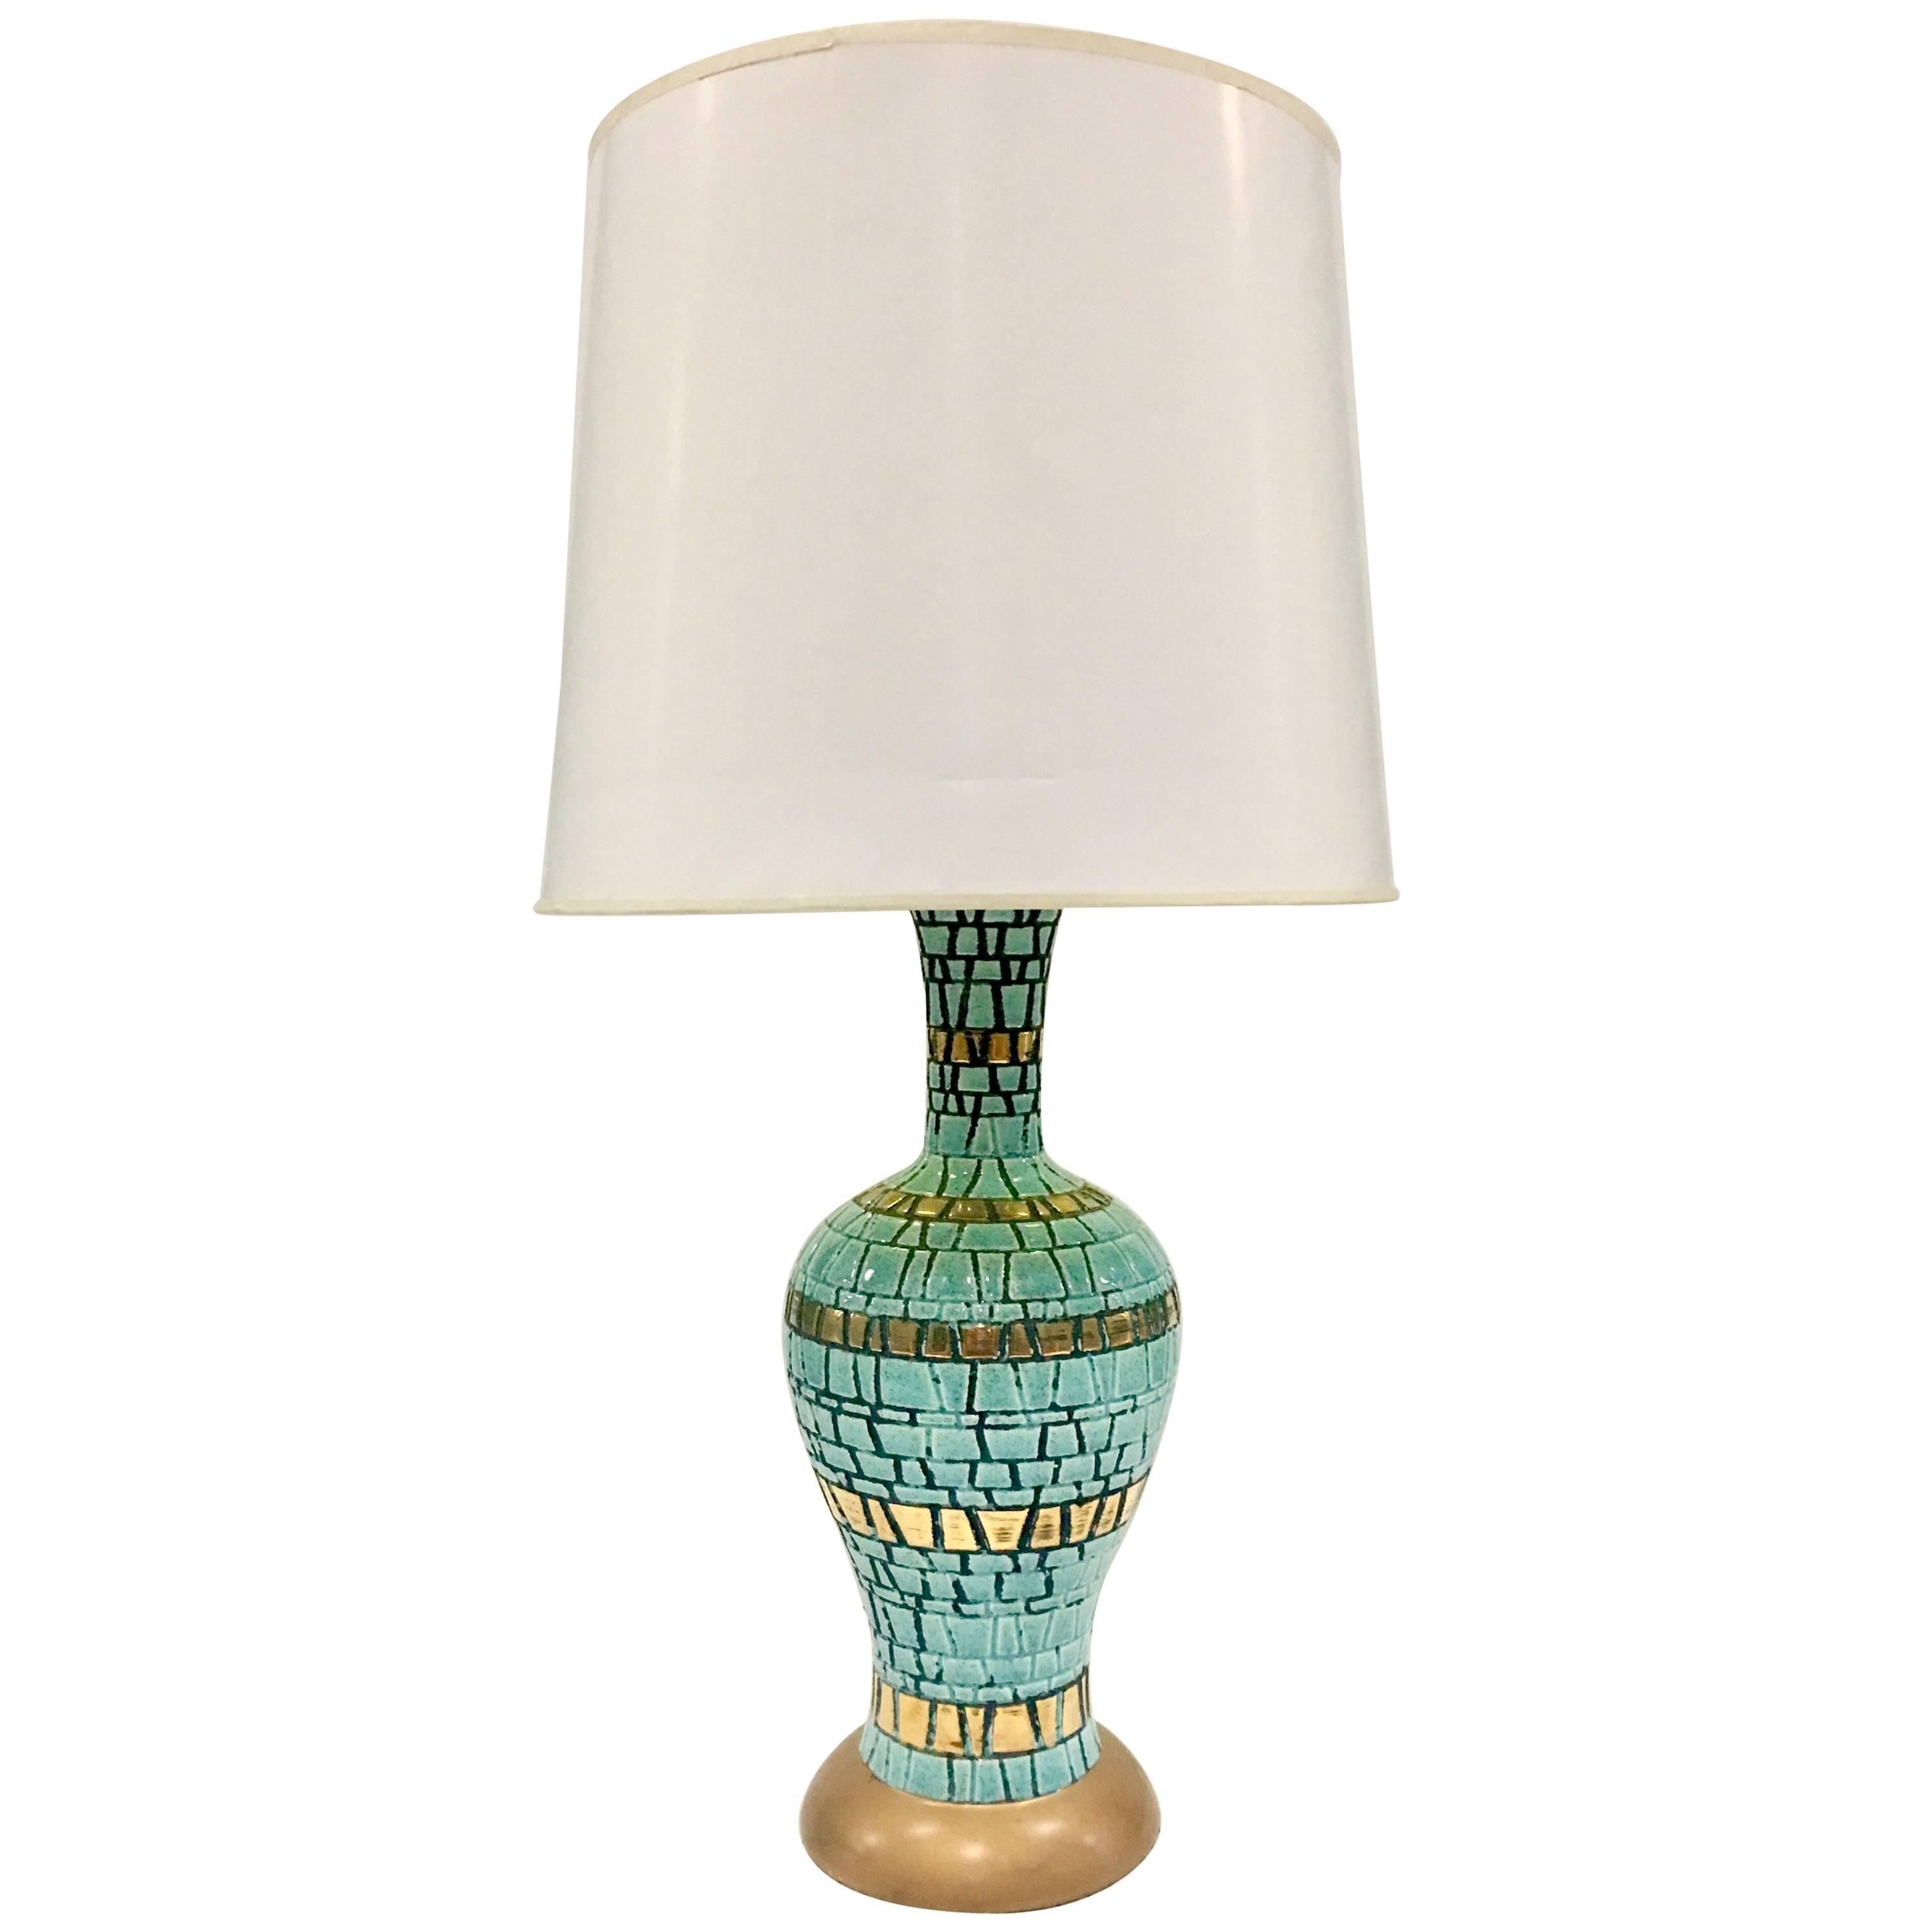 Mid-Century Modern Martz Style Ceramic Mosaic Tile Lamp